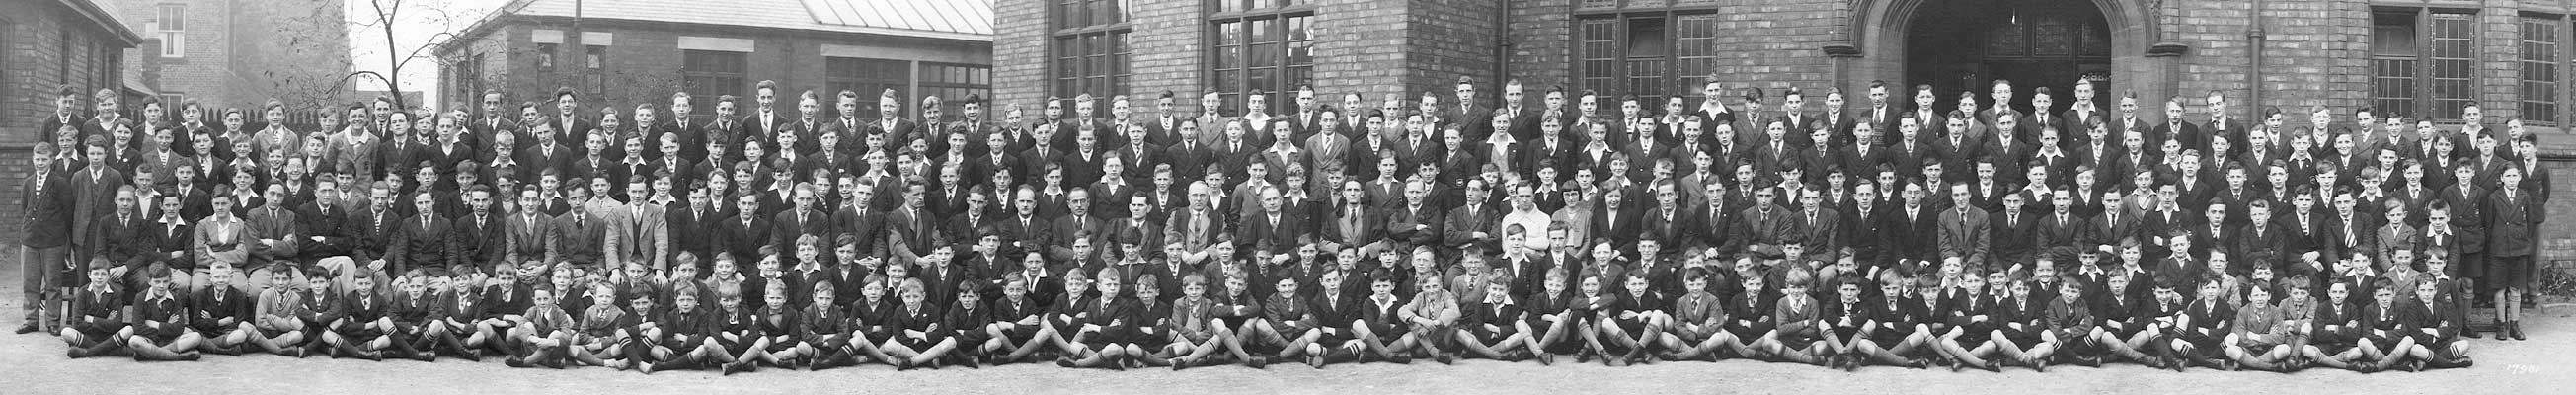 1931/2 - All School